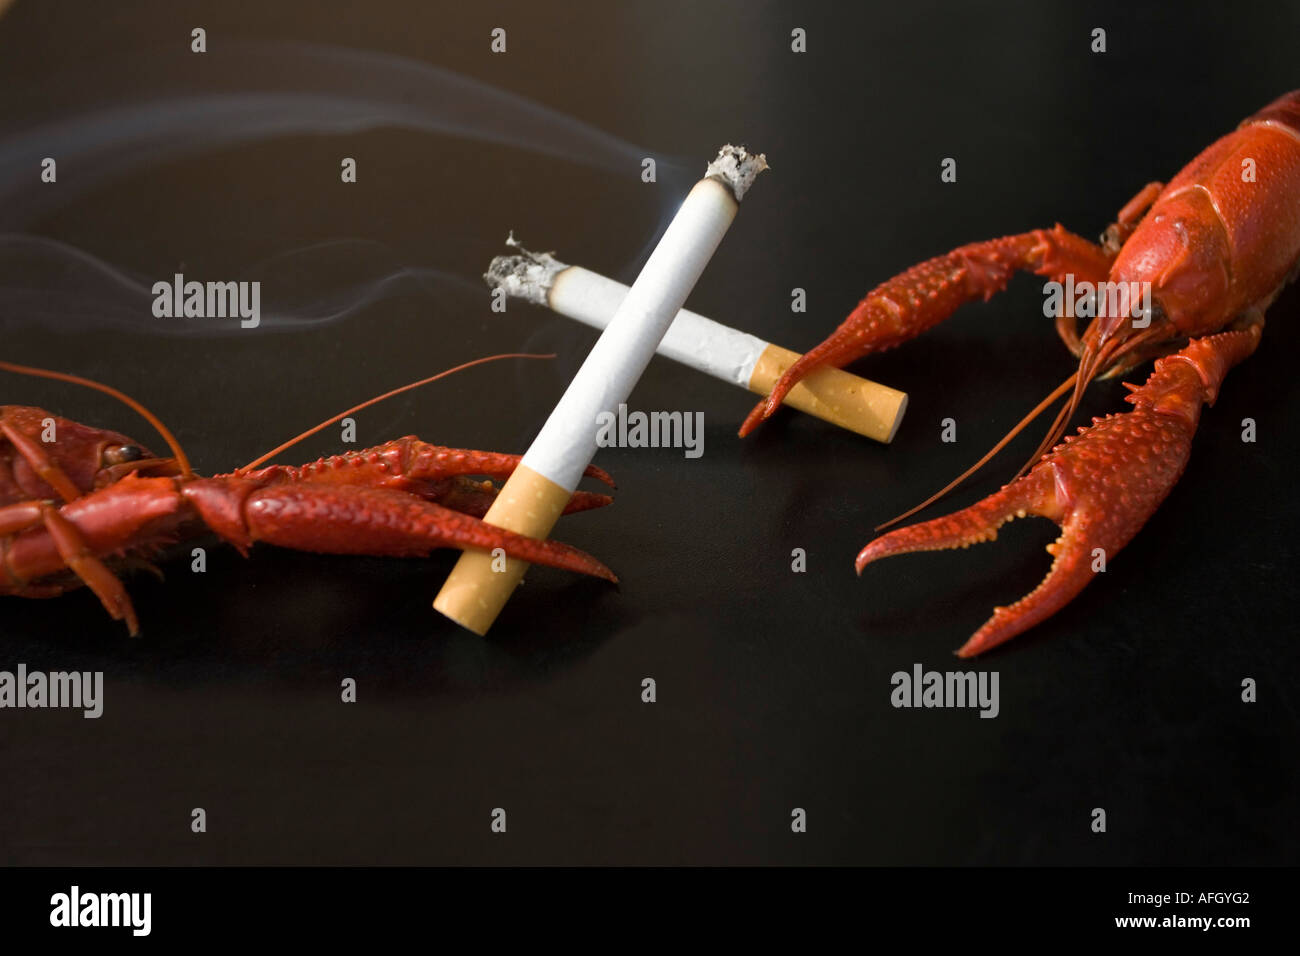 smoking is dangerous Stock Photo